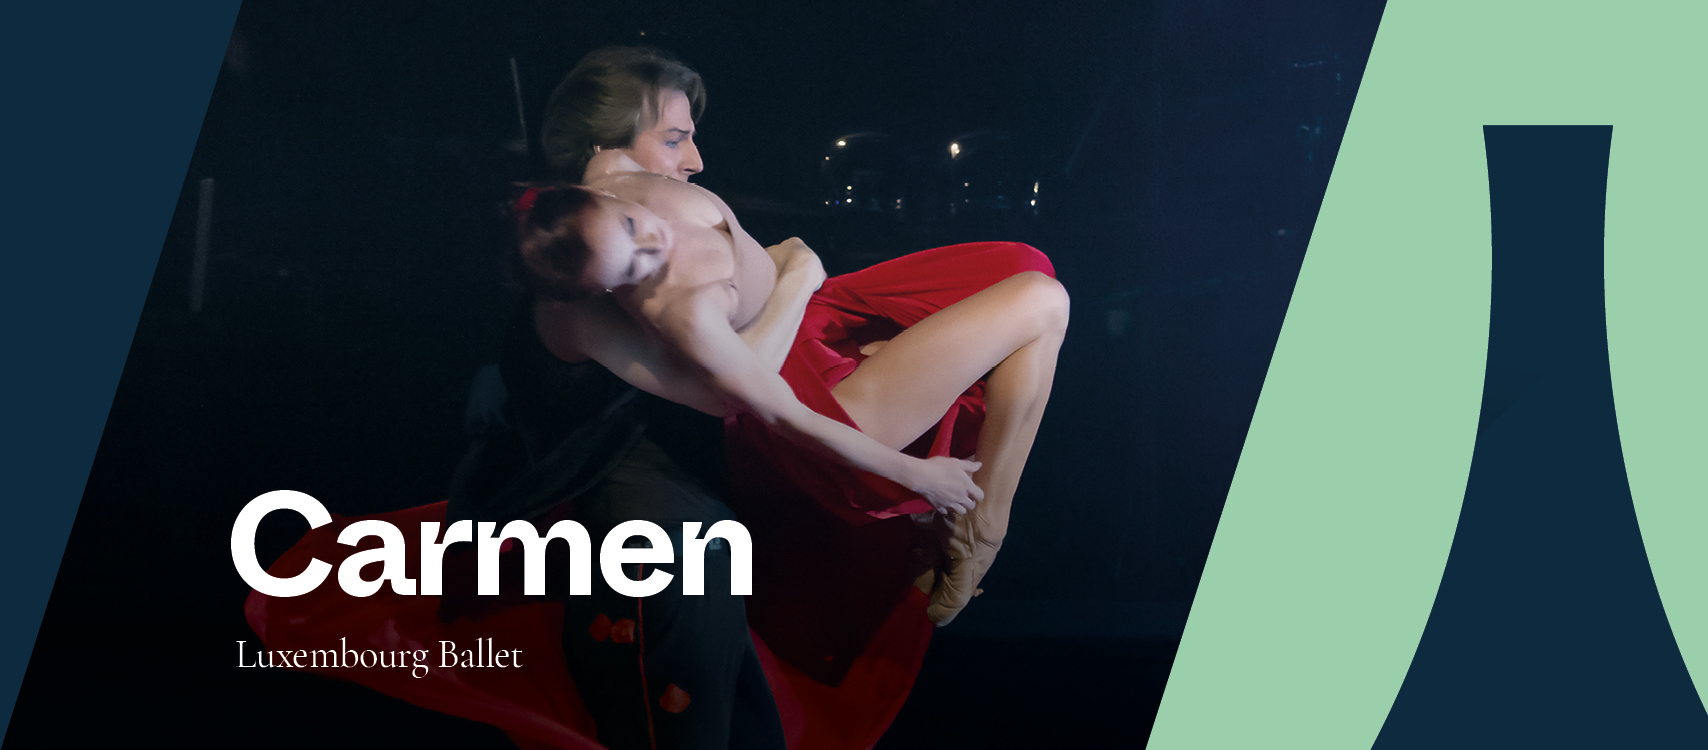 Carmen - Luxembourg Ballet